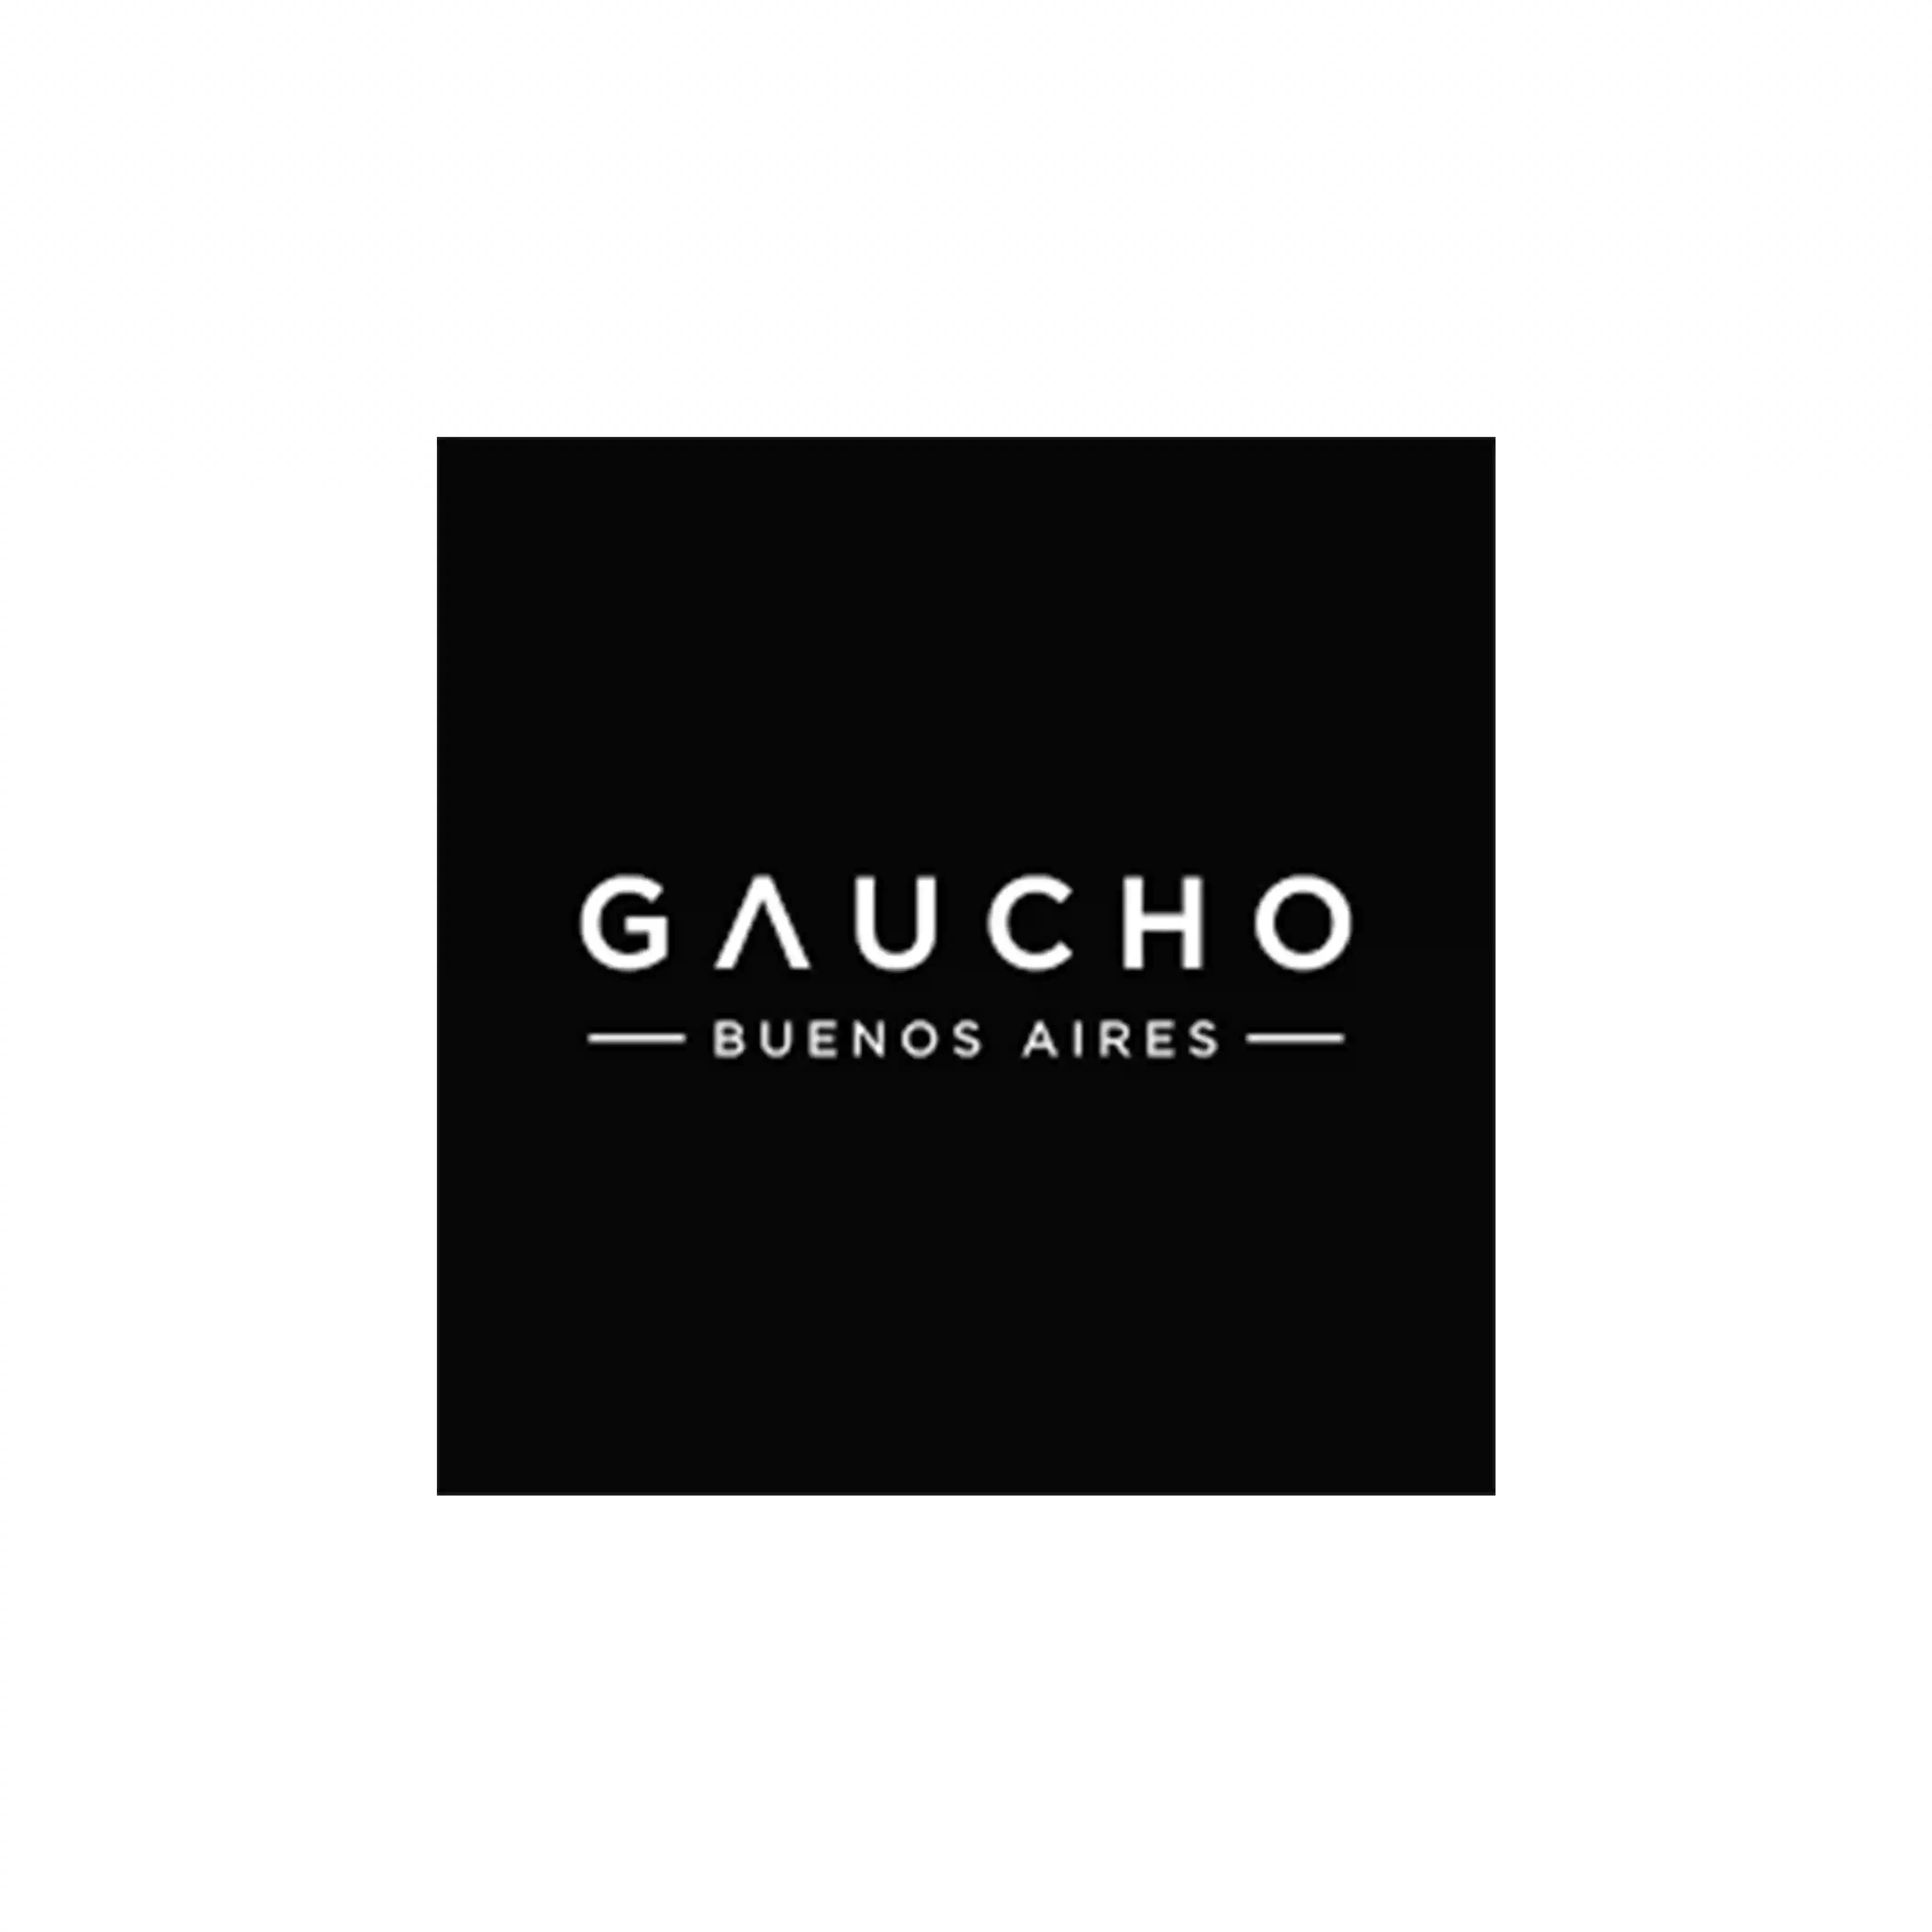 Gaucho Buenos Aires